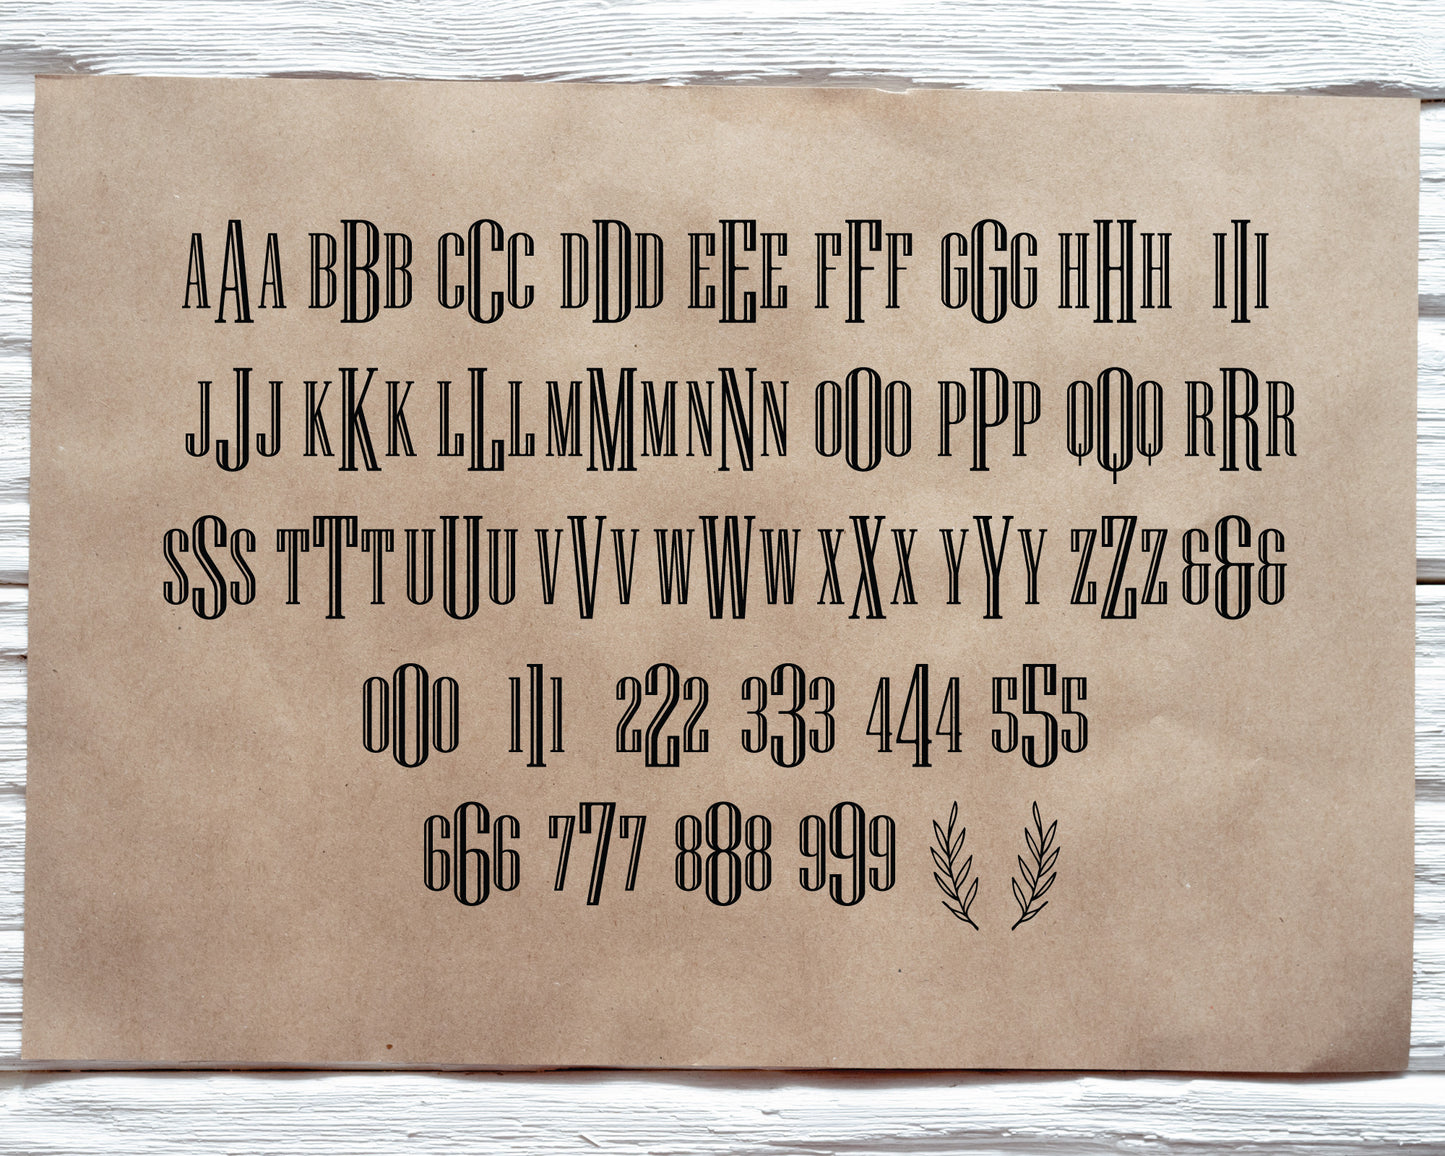 Big Monogram SVG & Font Bundle